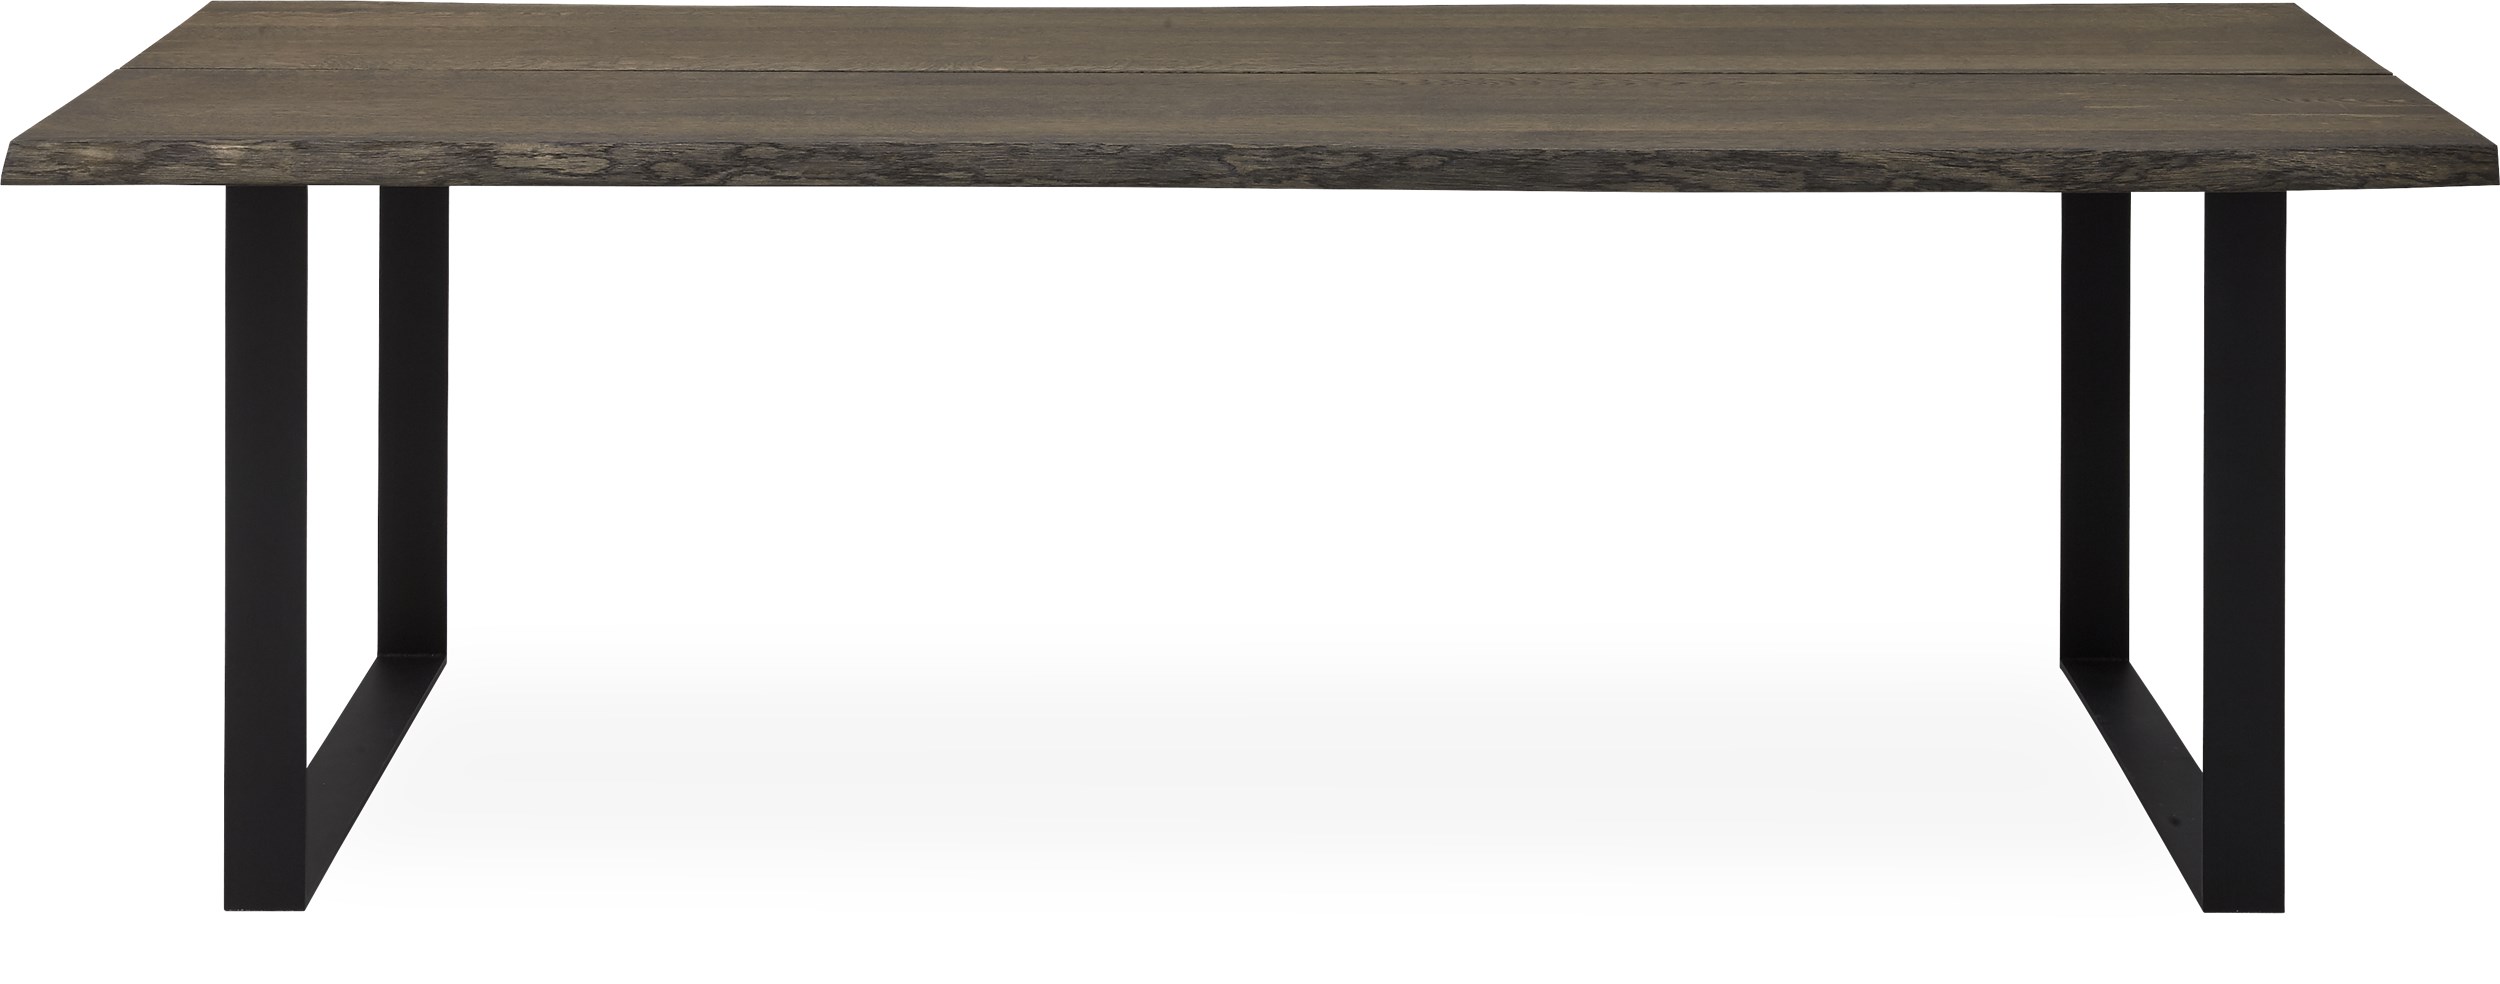 Timber 200 x 100 x 74 cm Spisebord - Spisebord